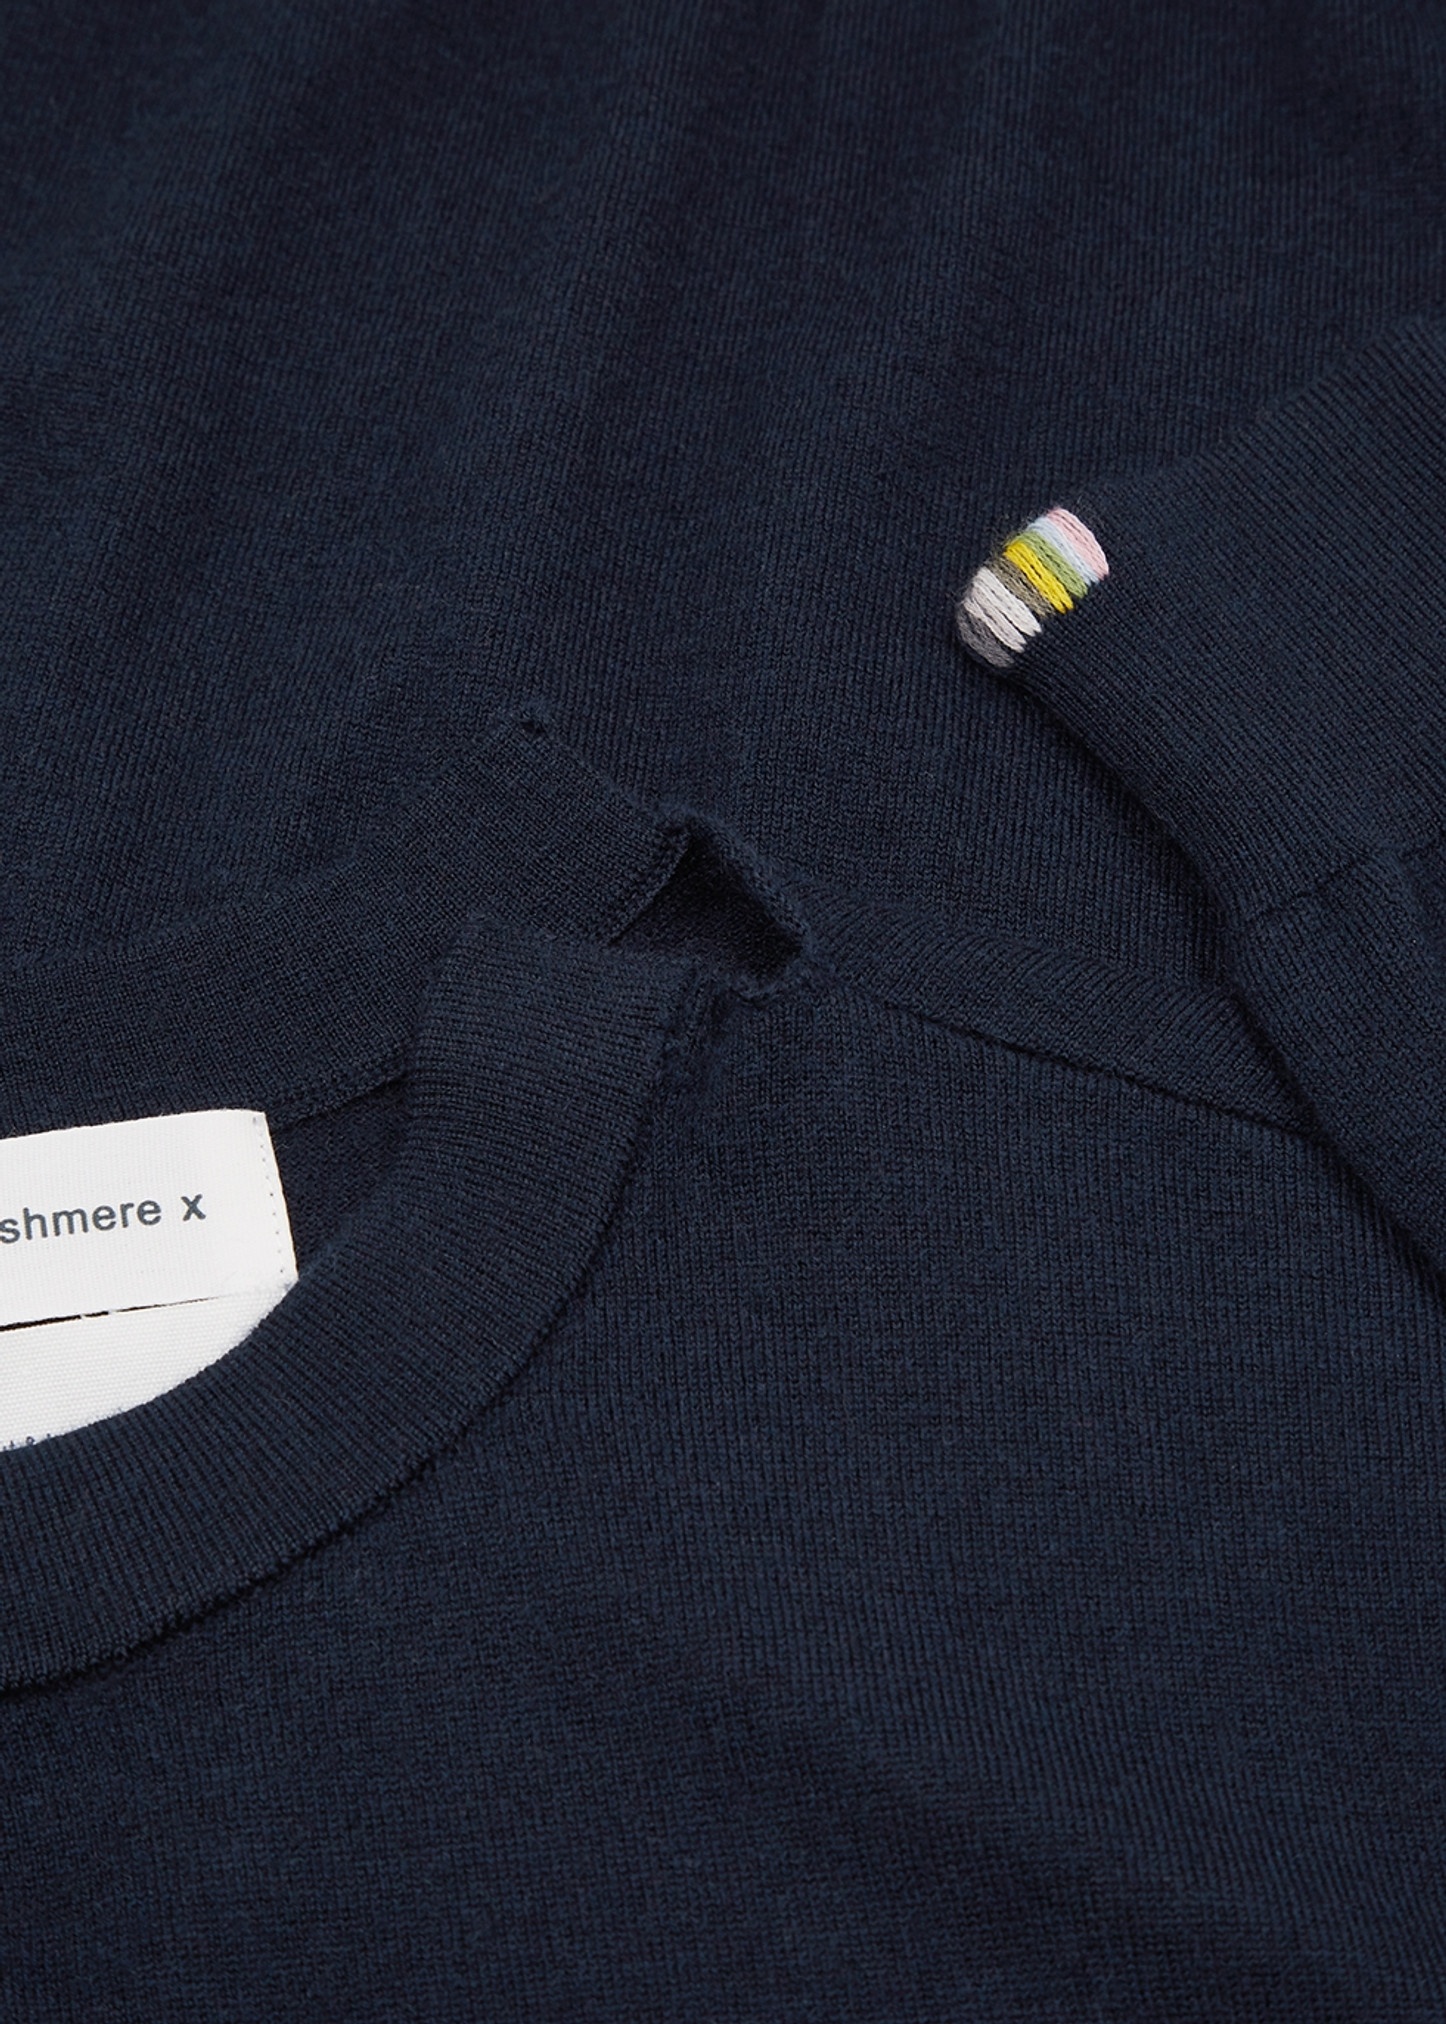 N°233 Class cashmere-blend jumper - 5